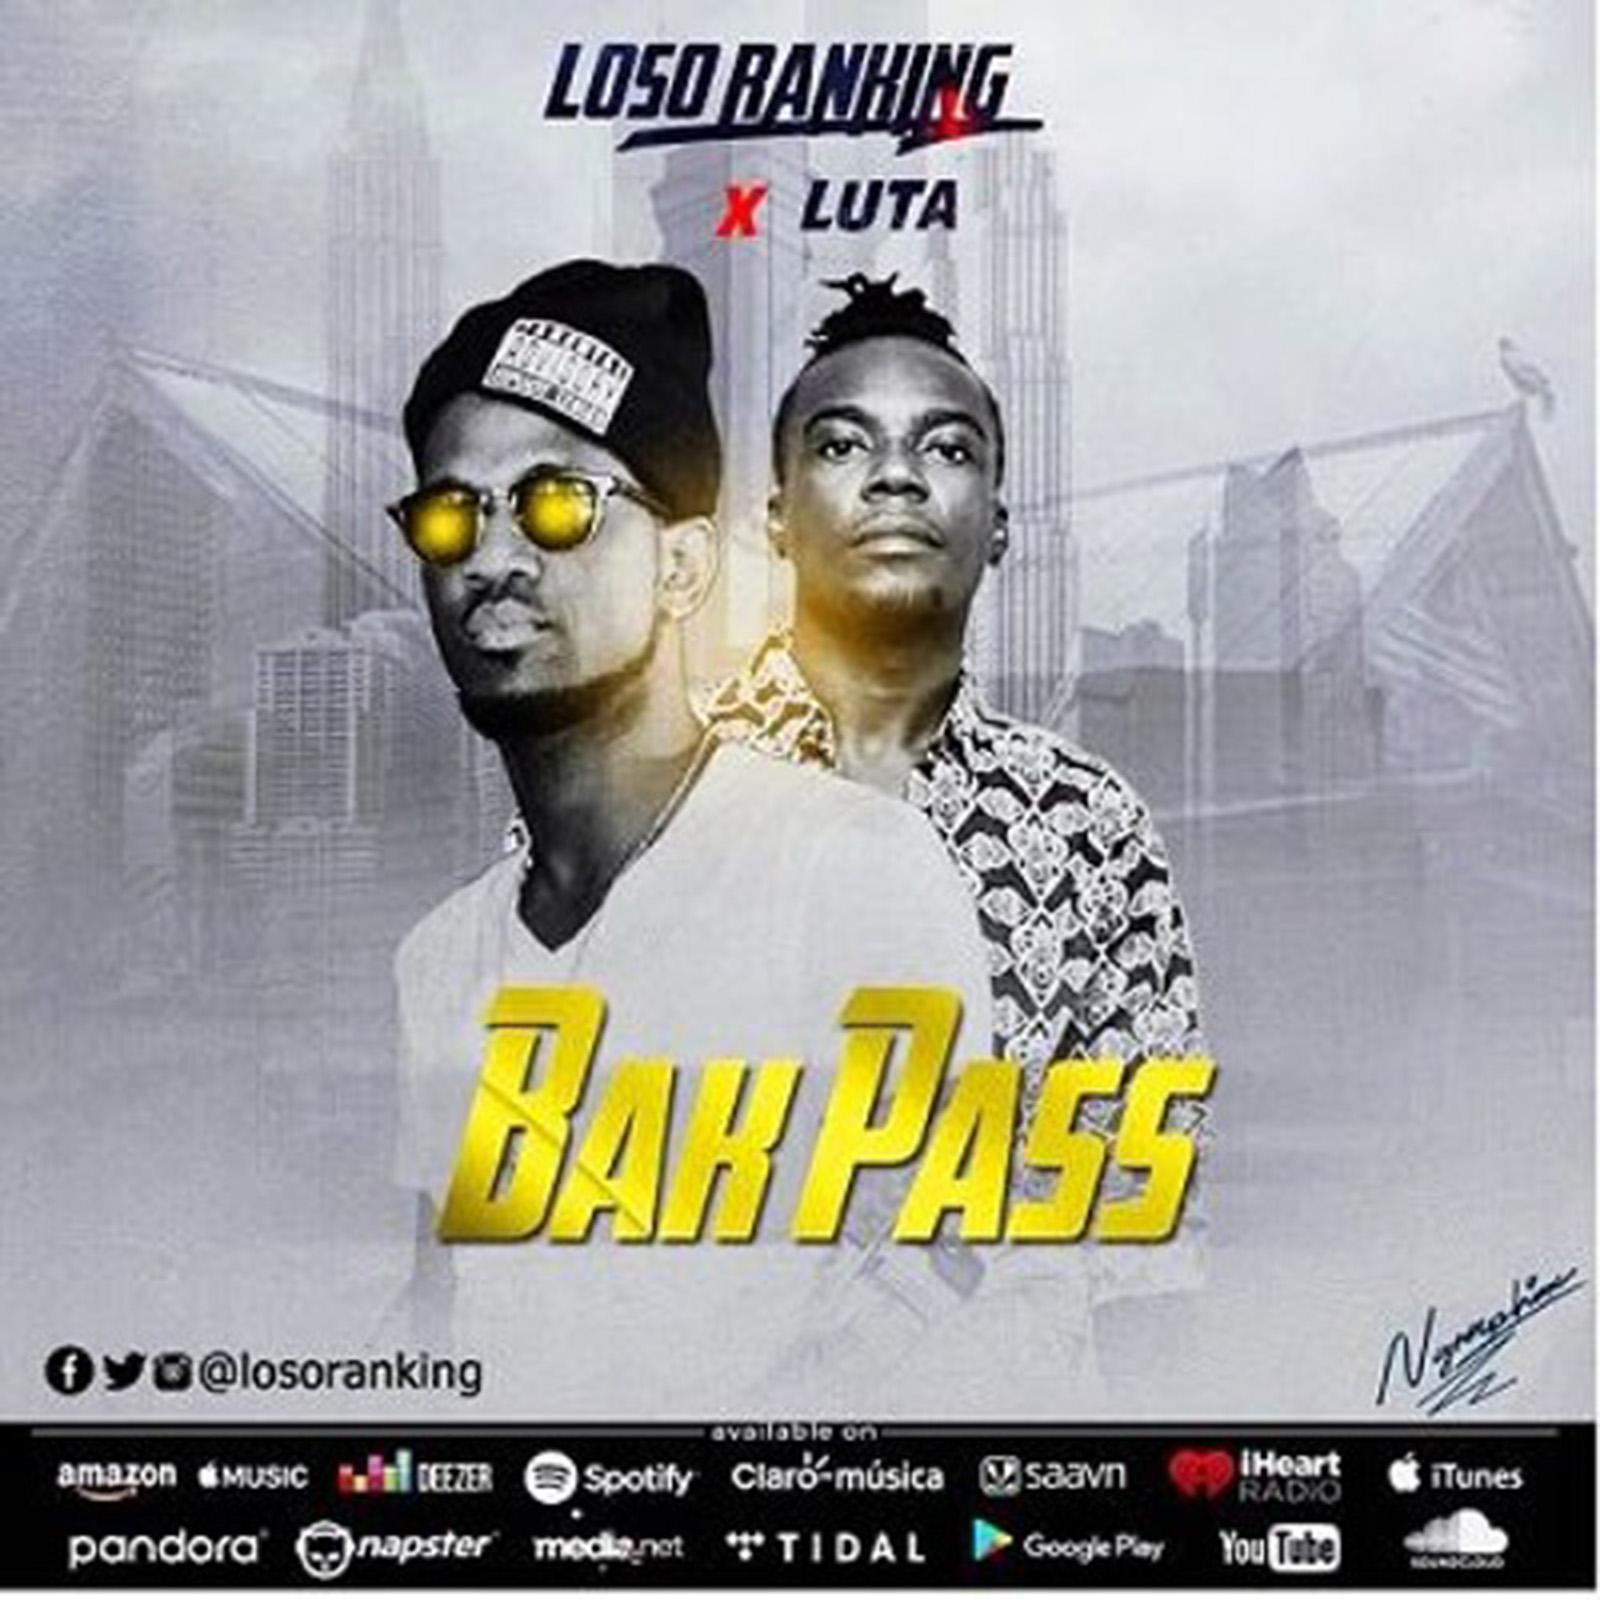 Bak Pass by Loso Ranking feat. Luta